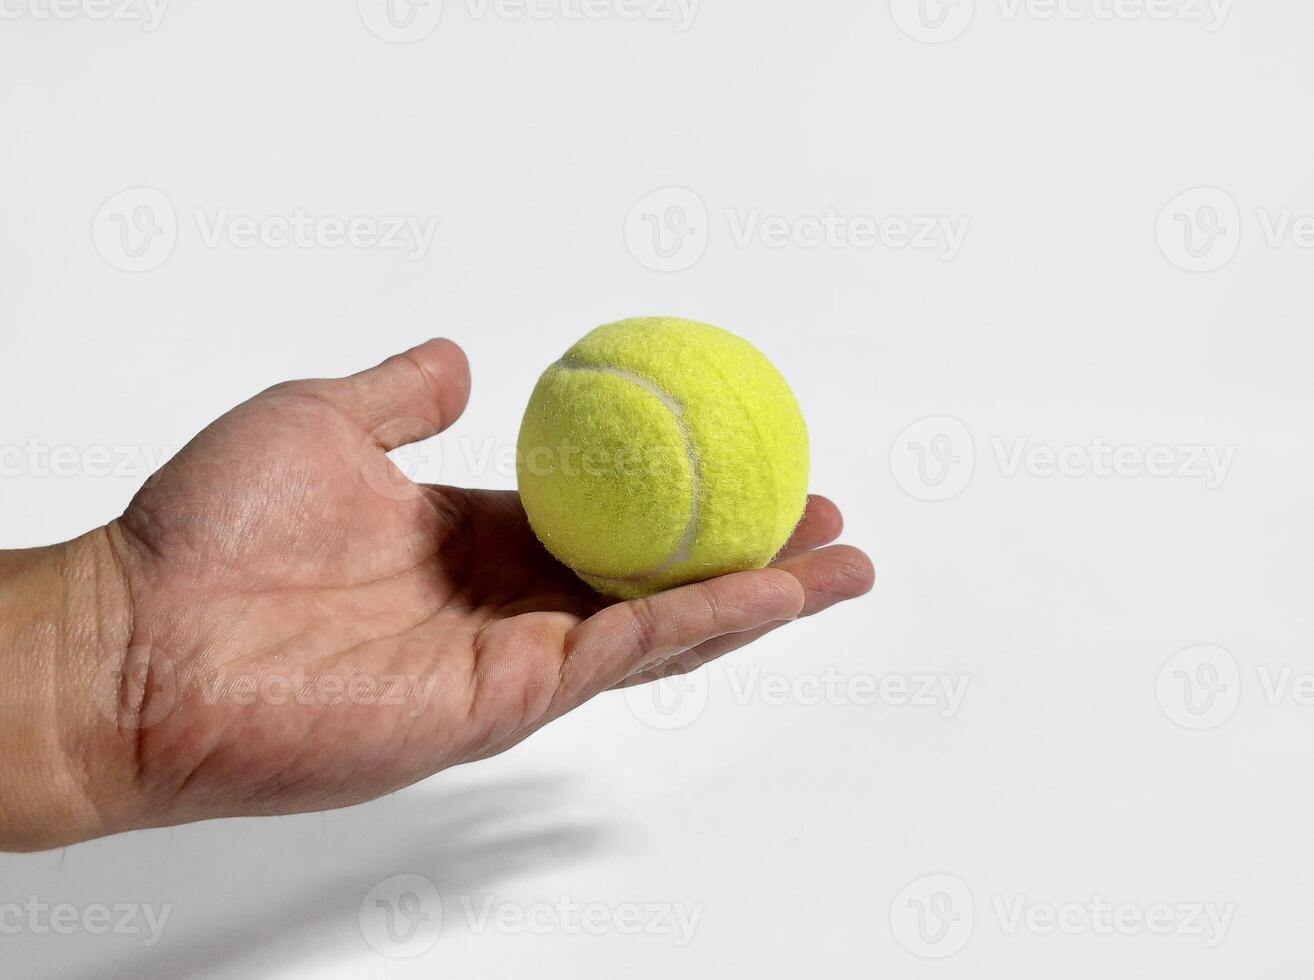 un tenis pelota retenida por un asiático hombre foto